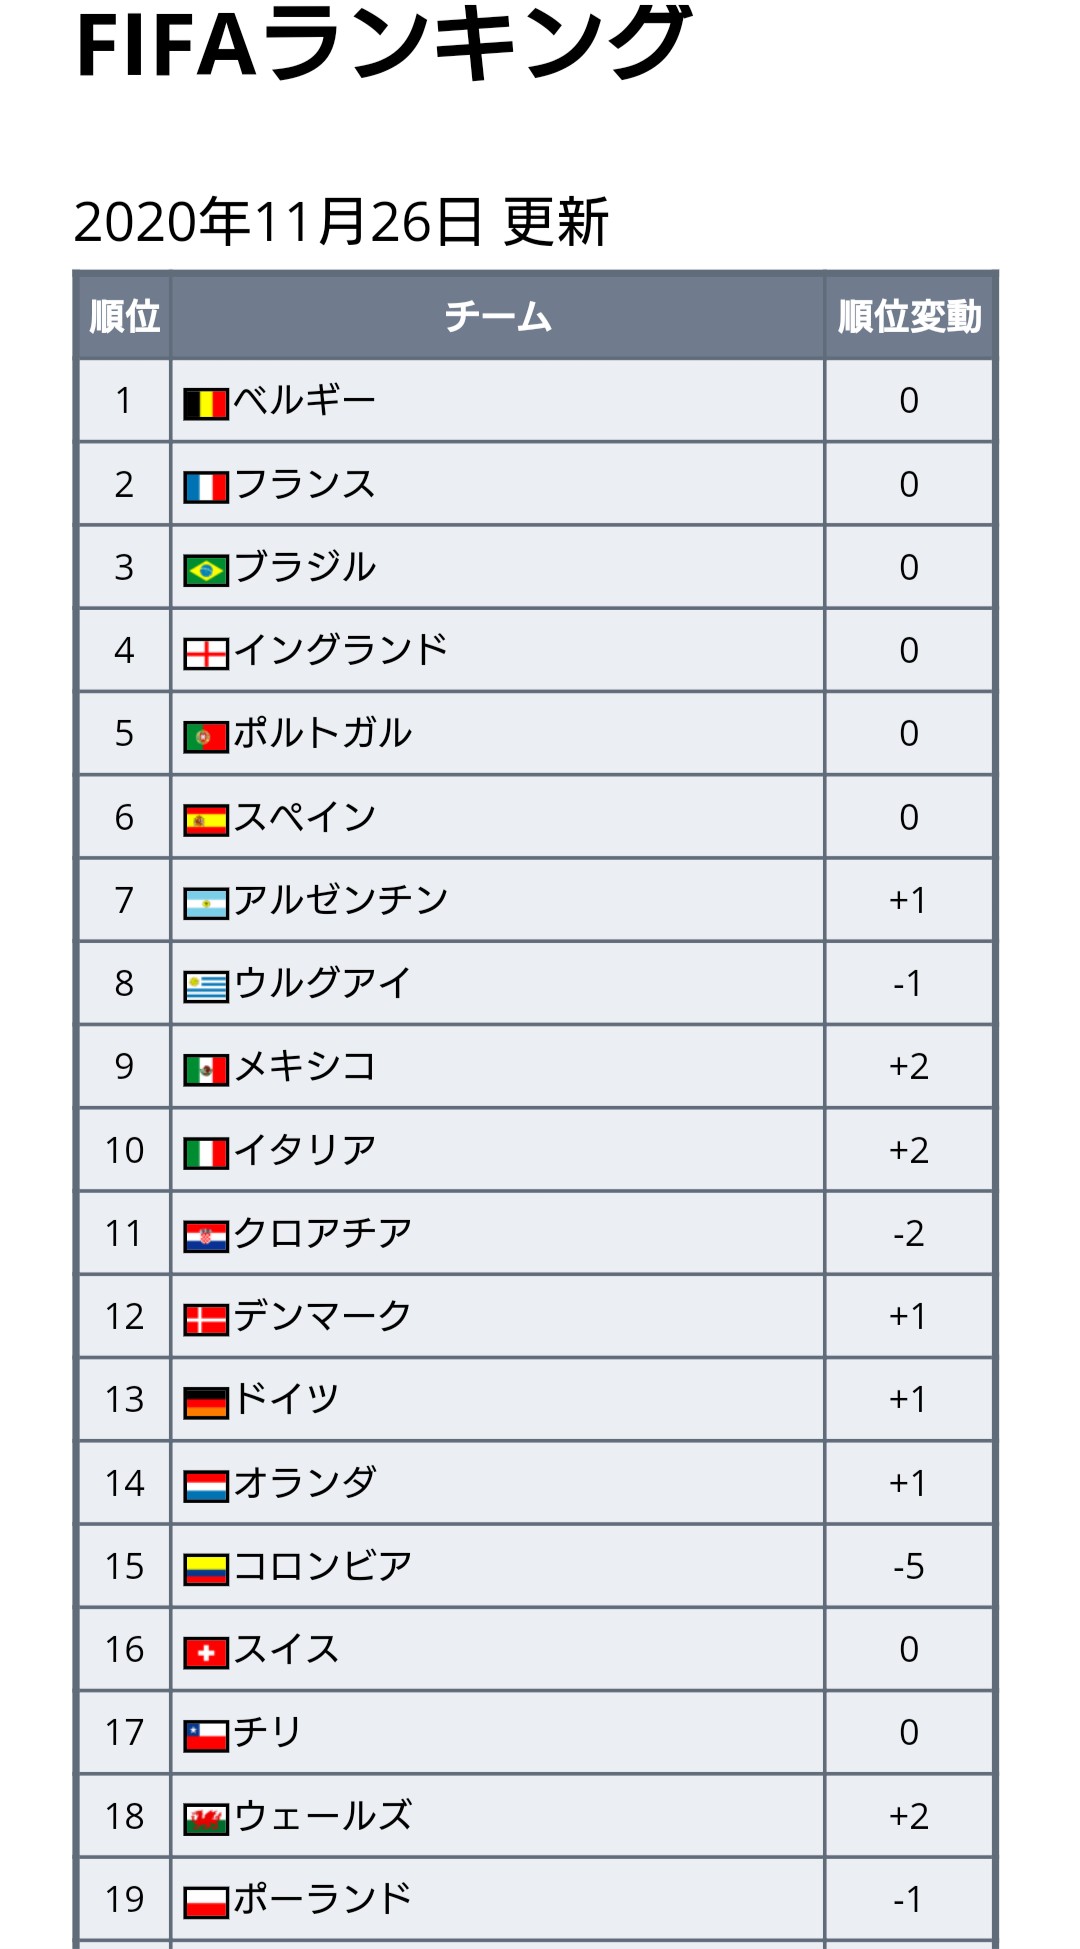 Twitter 上的 ワールドサッカー代表戦 最新fifaランキングが発表 11 26更新 予定より1日遅れての発表 1位はベルギーで 18年9月から2年以上首位をキープ 日本は前回と変わらず27位で アジアではトップ 次回更新は来月 12 10 木 予定 Fifa